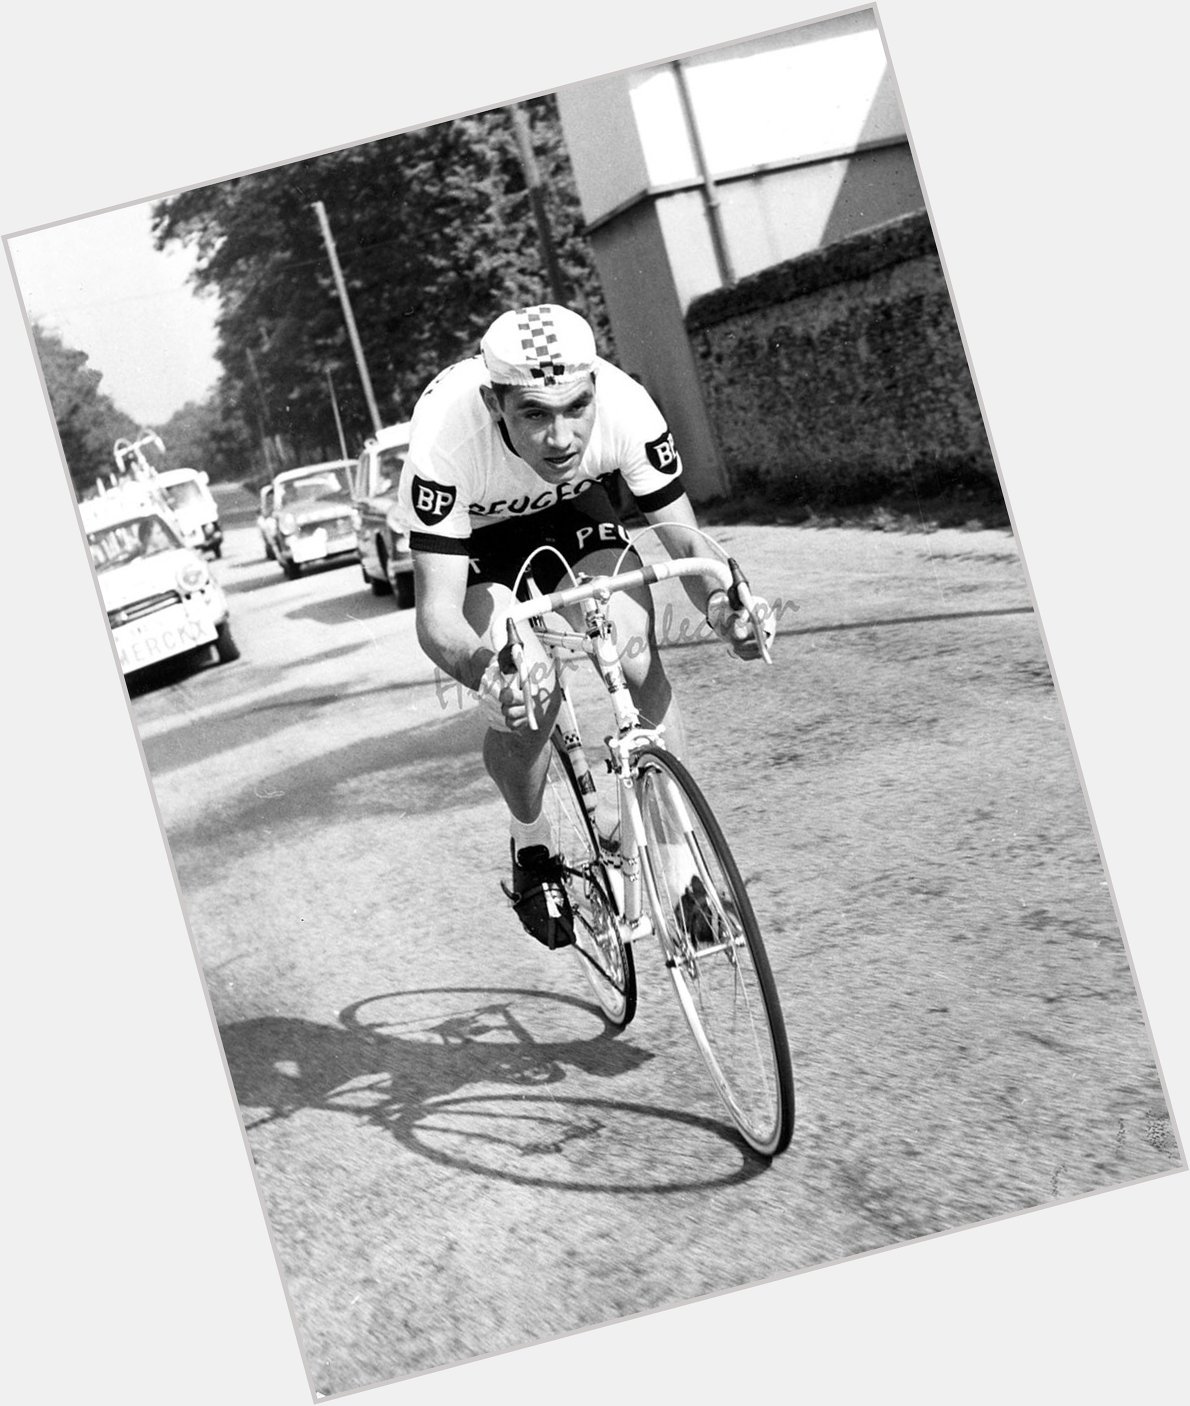 Happy 76th birthday to Eddy Merckx! 

Celebrate by revisiting his legendary 1972 season:  